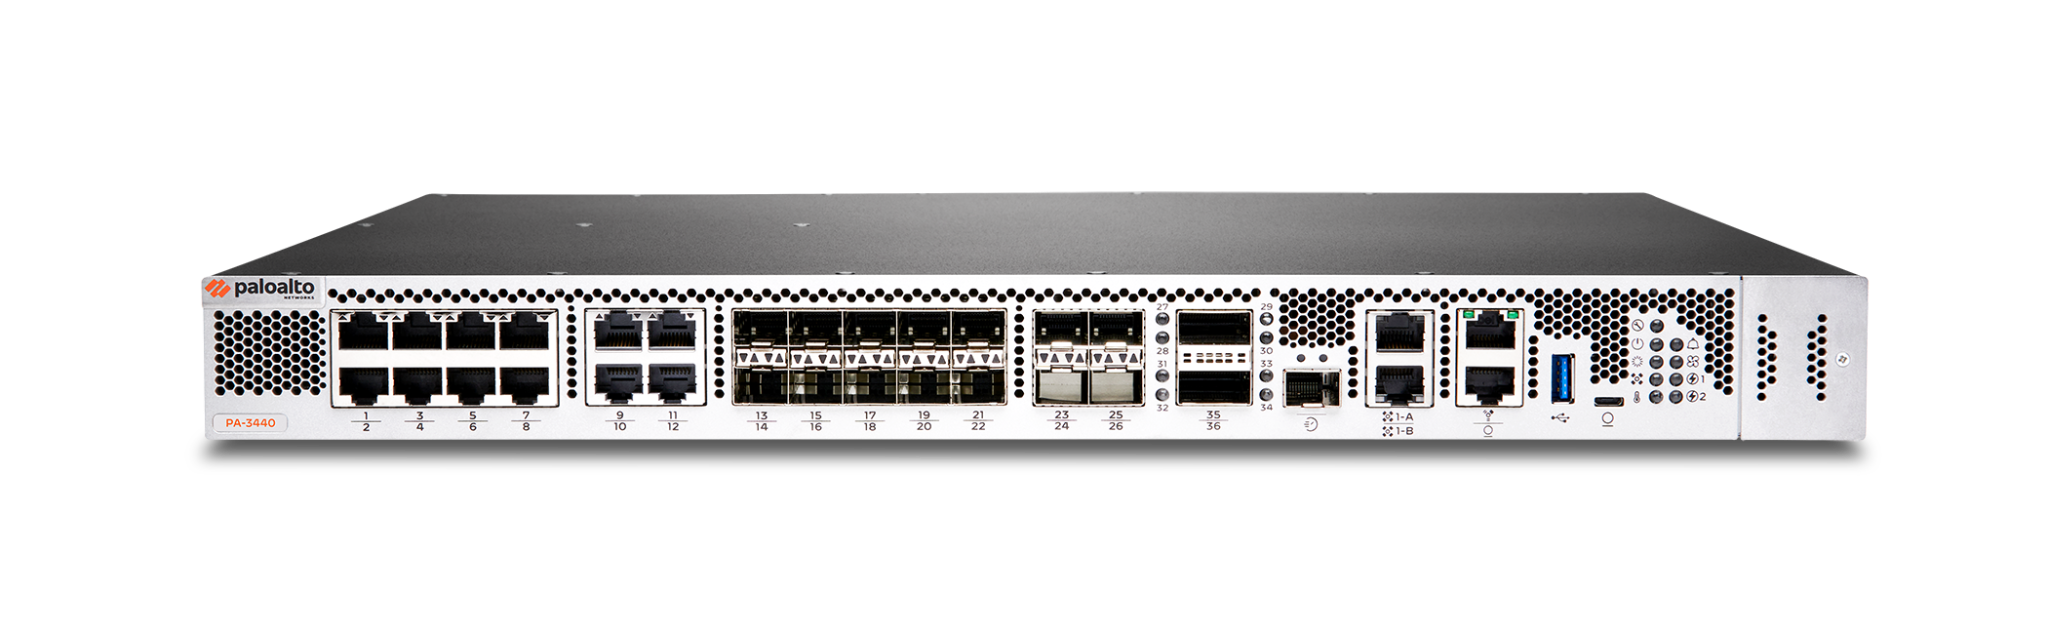 Palo Alto Networks PA-3400 Series Nebula hardware